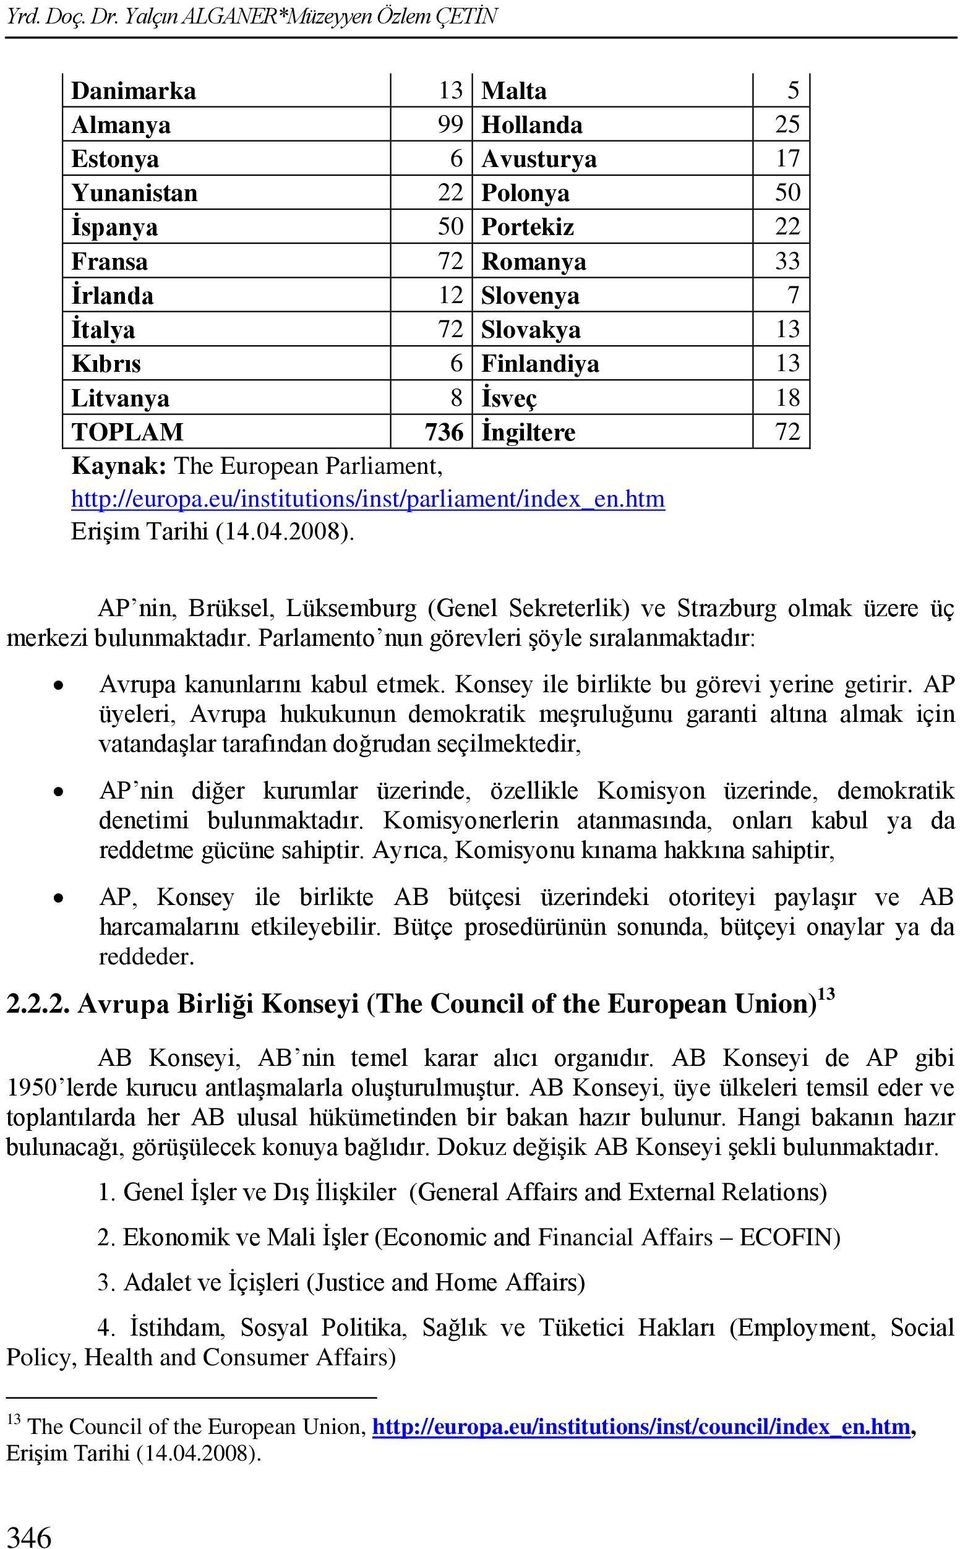 İtalya 72 Slovakya 13 Kıbrıs 6 Finlandiya 13 Litvanya 8 İsveç 18 TOPLAM 736 İngiltere 72 Kaynak: The European Parliament, http://europa.eu/institutions/inst/parliament/index_en.htm EriĢim Tarihi (14.